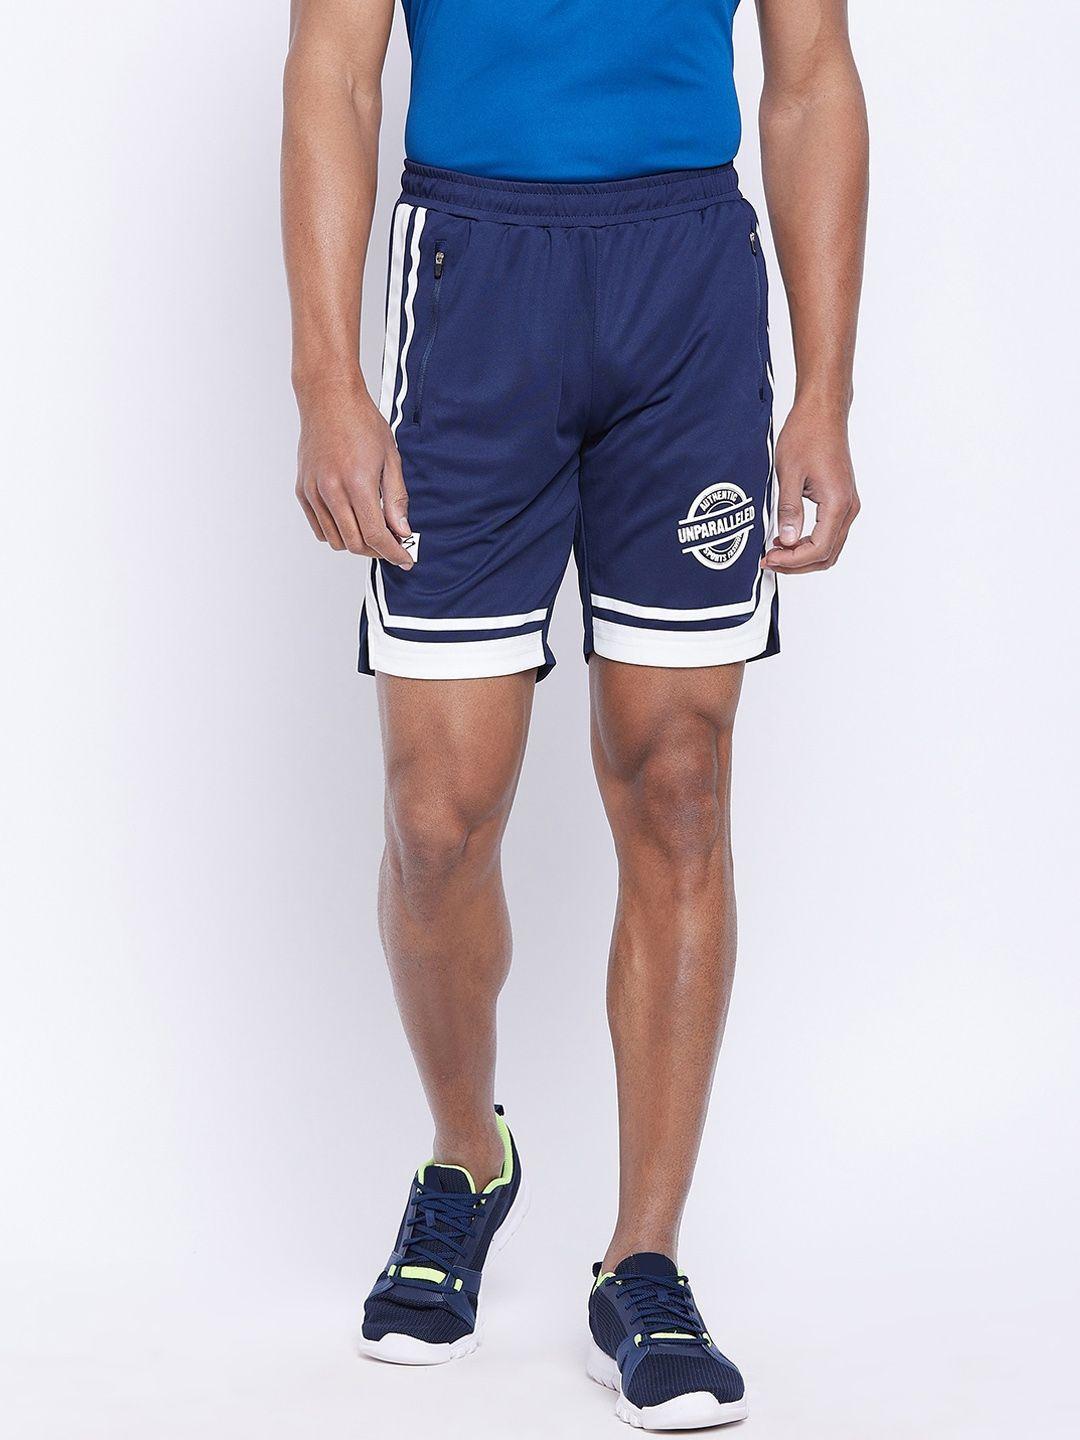 unpar men navy blue striped outdoor sports shorts